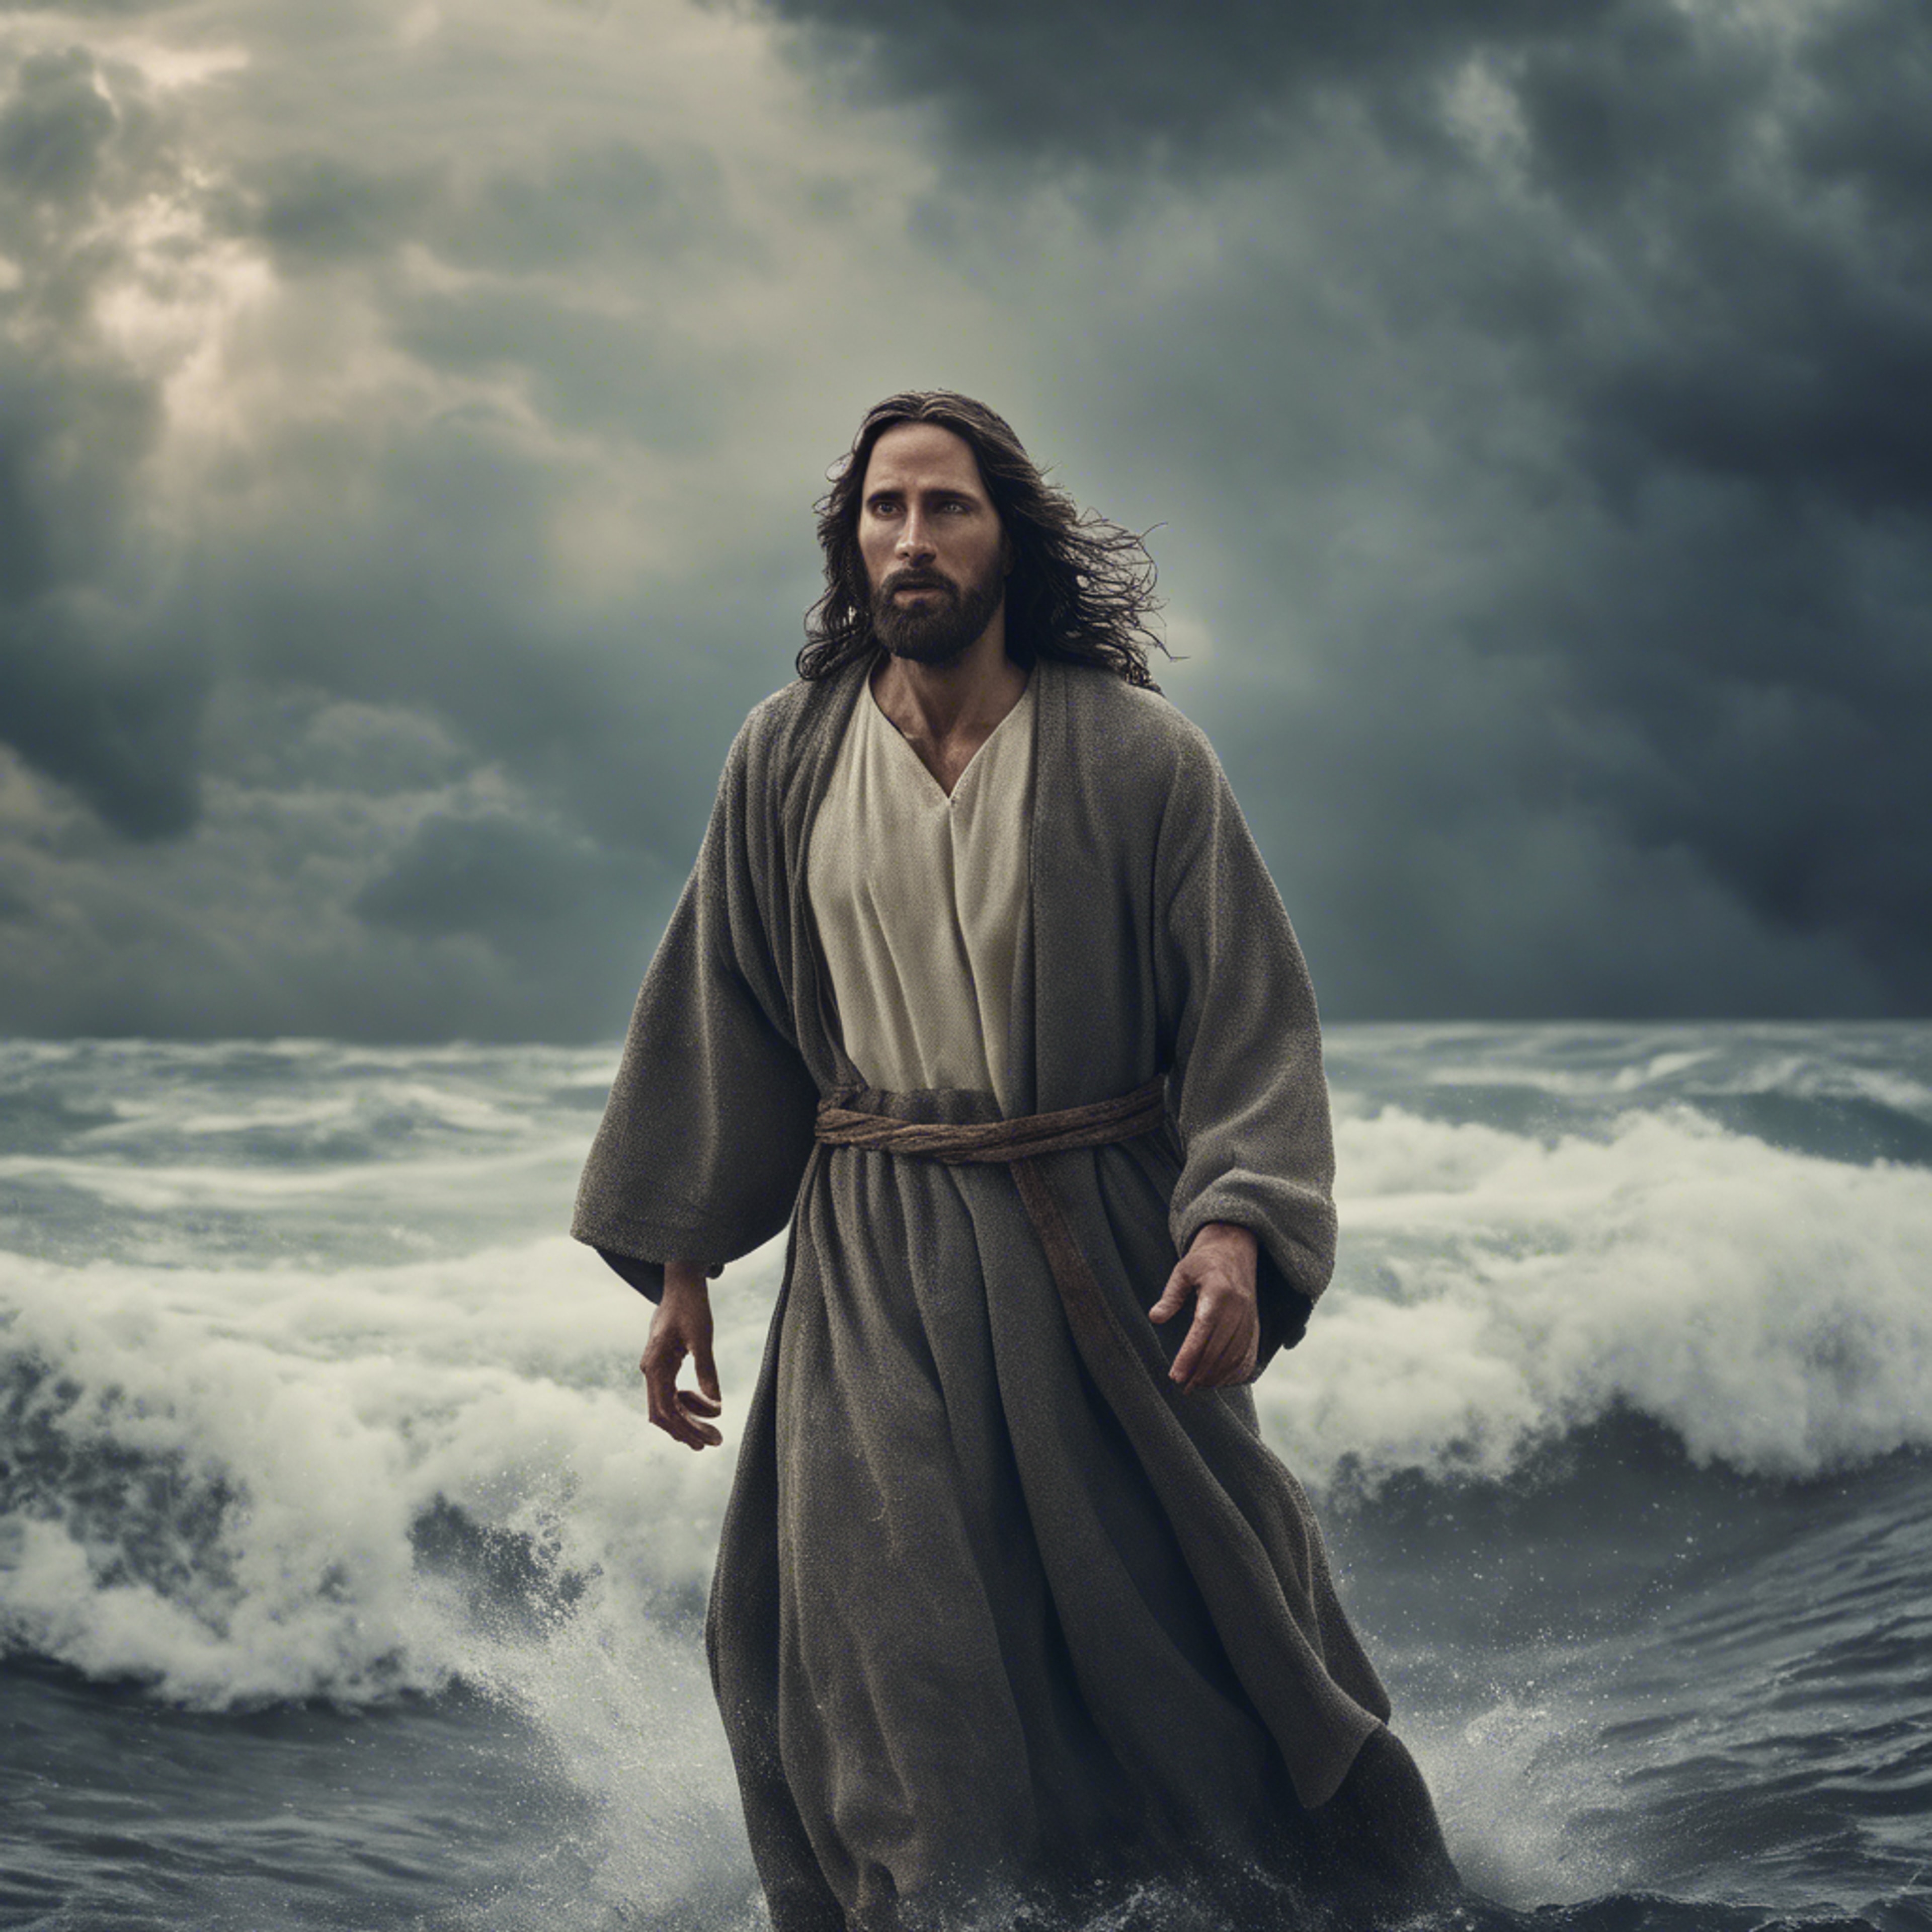 Jesus Christ calmly walking across a stormy sea under a dramatic, cloudy sky. Tapeta[40d9c306725247569090]